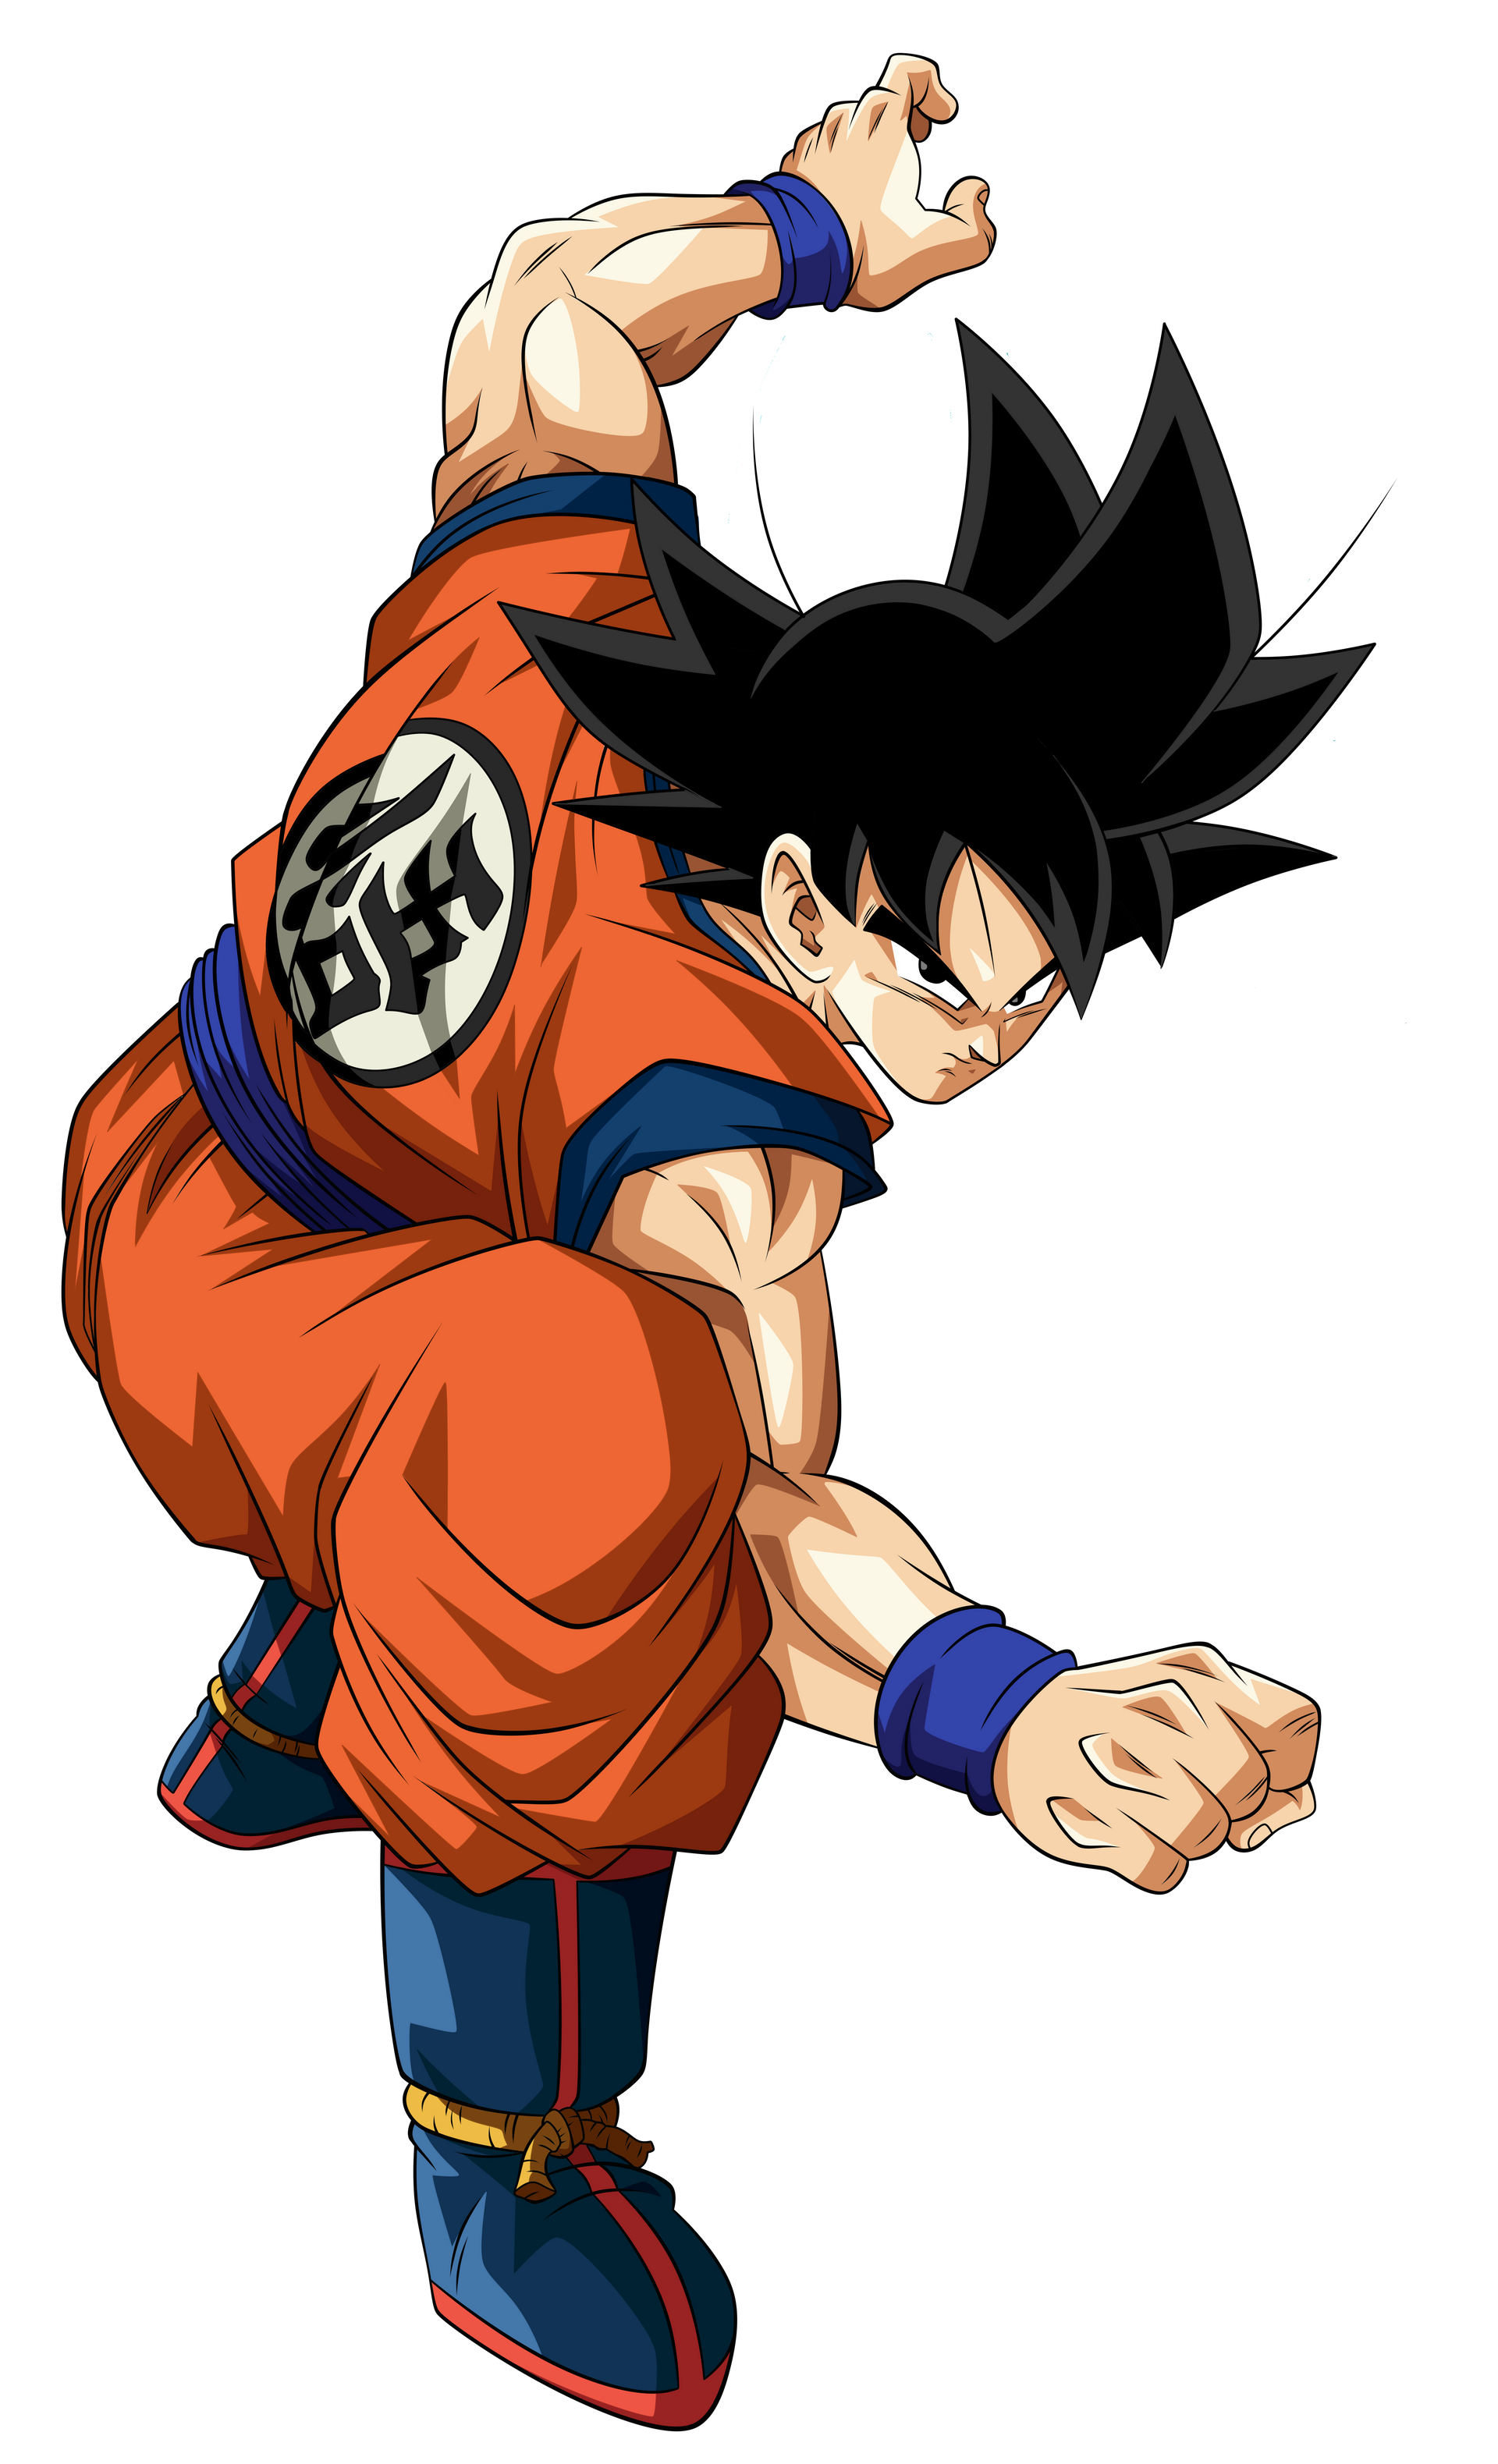 Goku's Super Saiyan Blue & Super Saiyan 4 Forms Combine in Epic